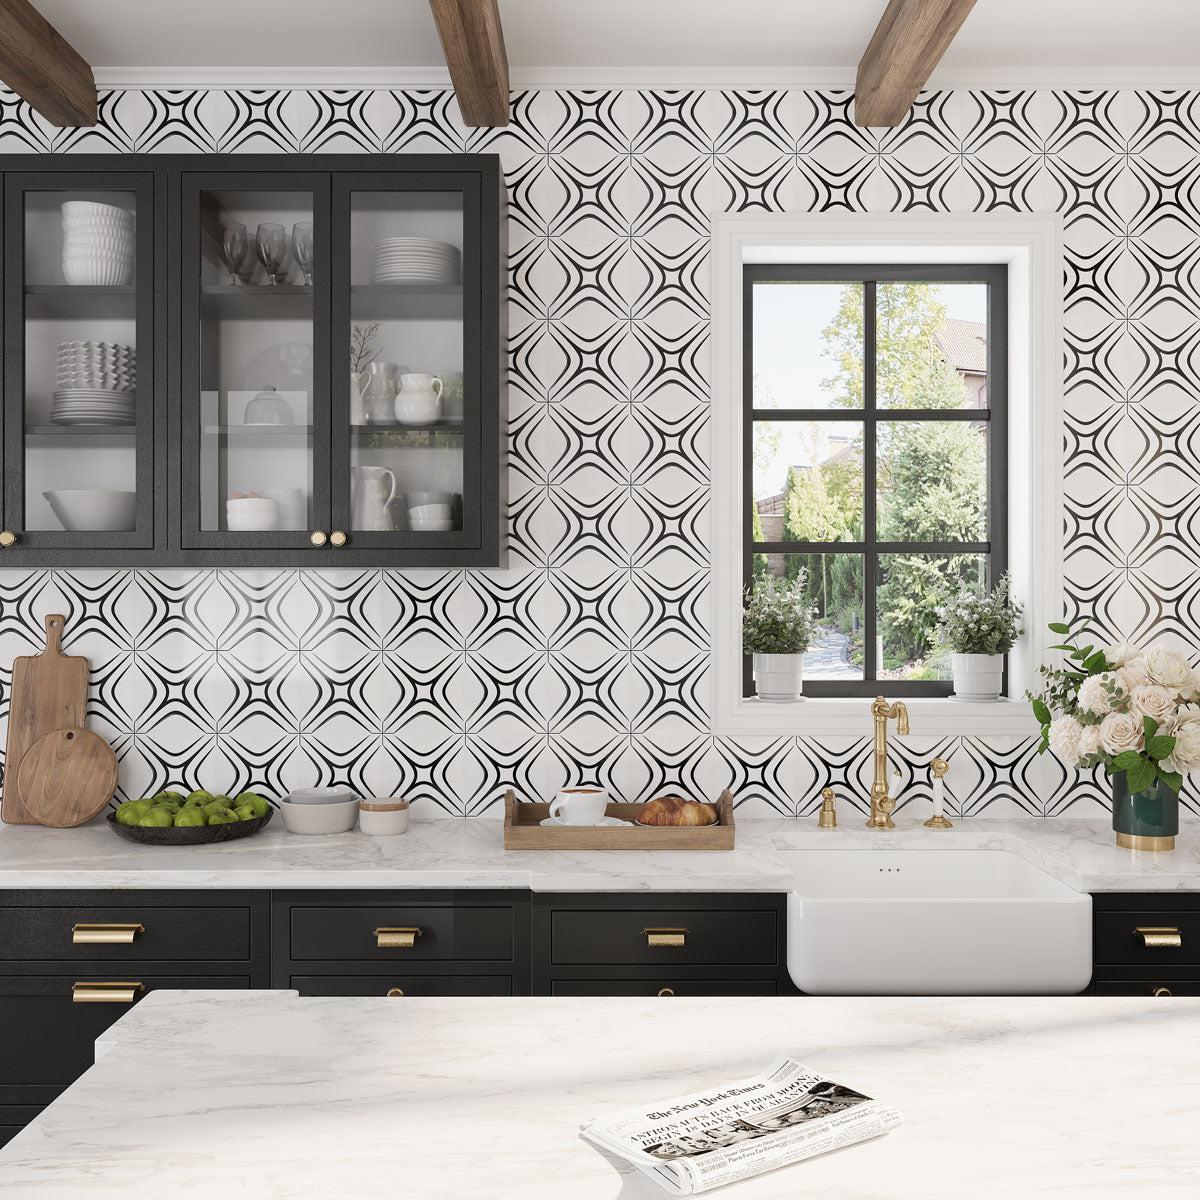 Santorini Retro Star White and Black Marble Mosaic Tile